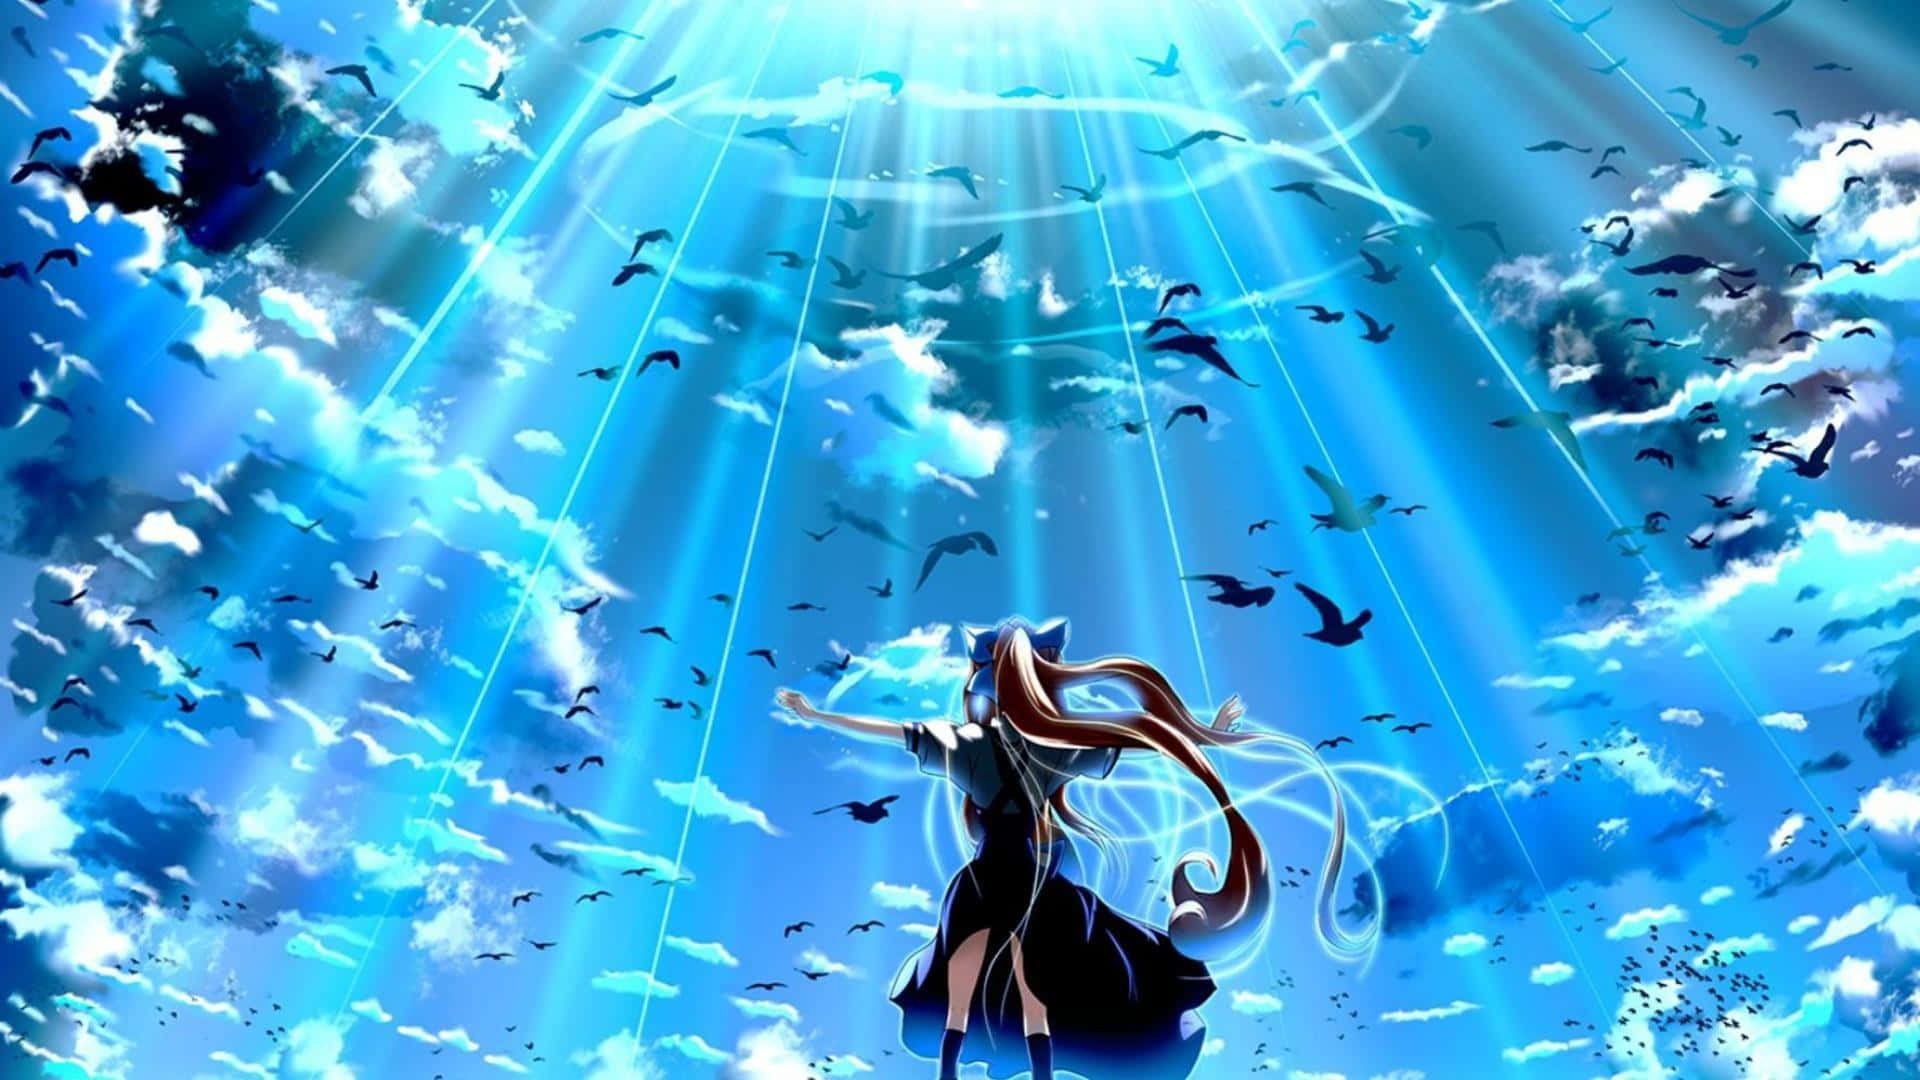 Blue Anime Background Sky Full Of Birds Misuzu Kamio